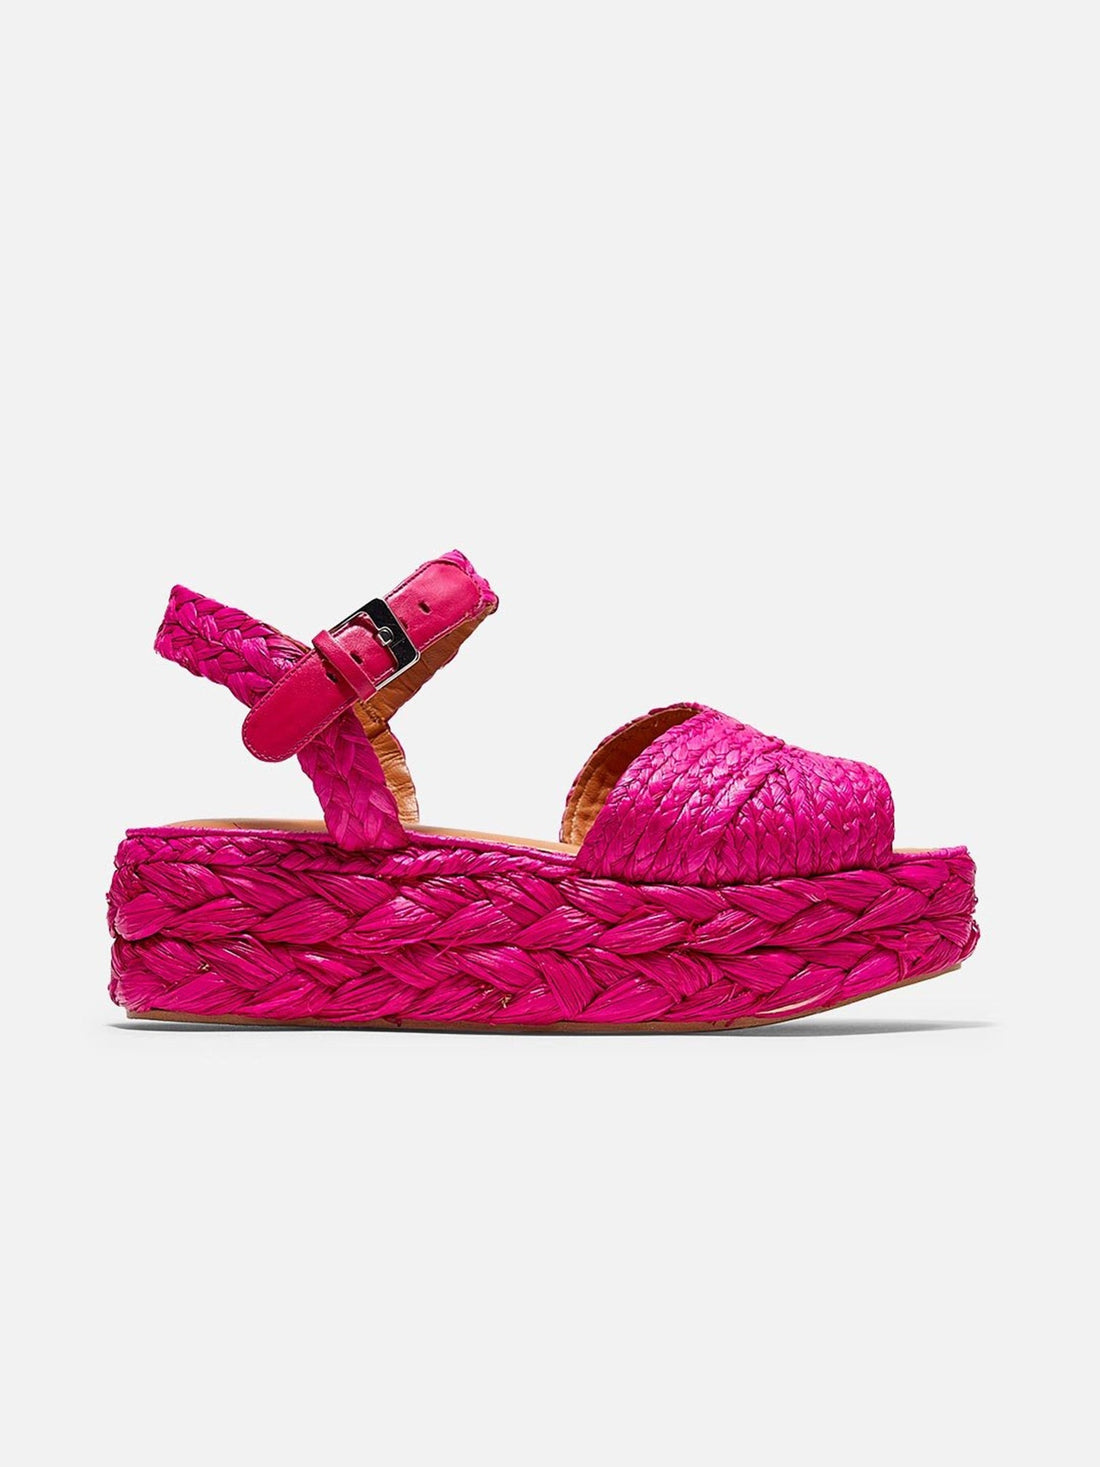 SANDALS - AIDA sandals, hibiscus pink straw and lambskin - AIDA9HIBRFAM350 - Clergerie Paris - USA